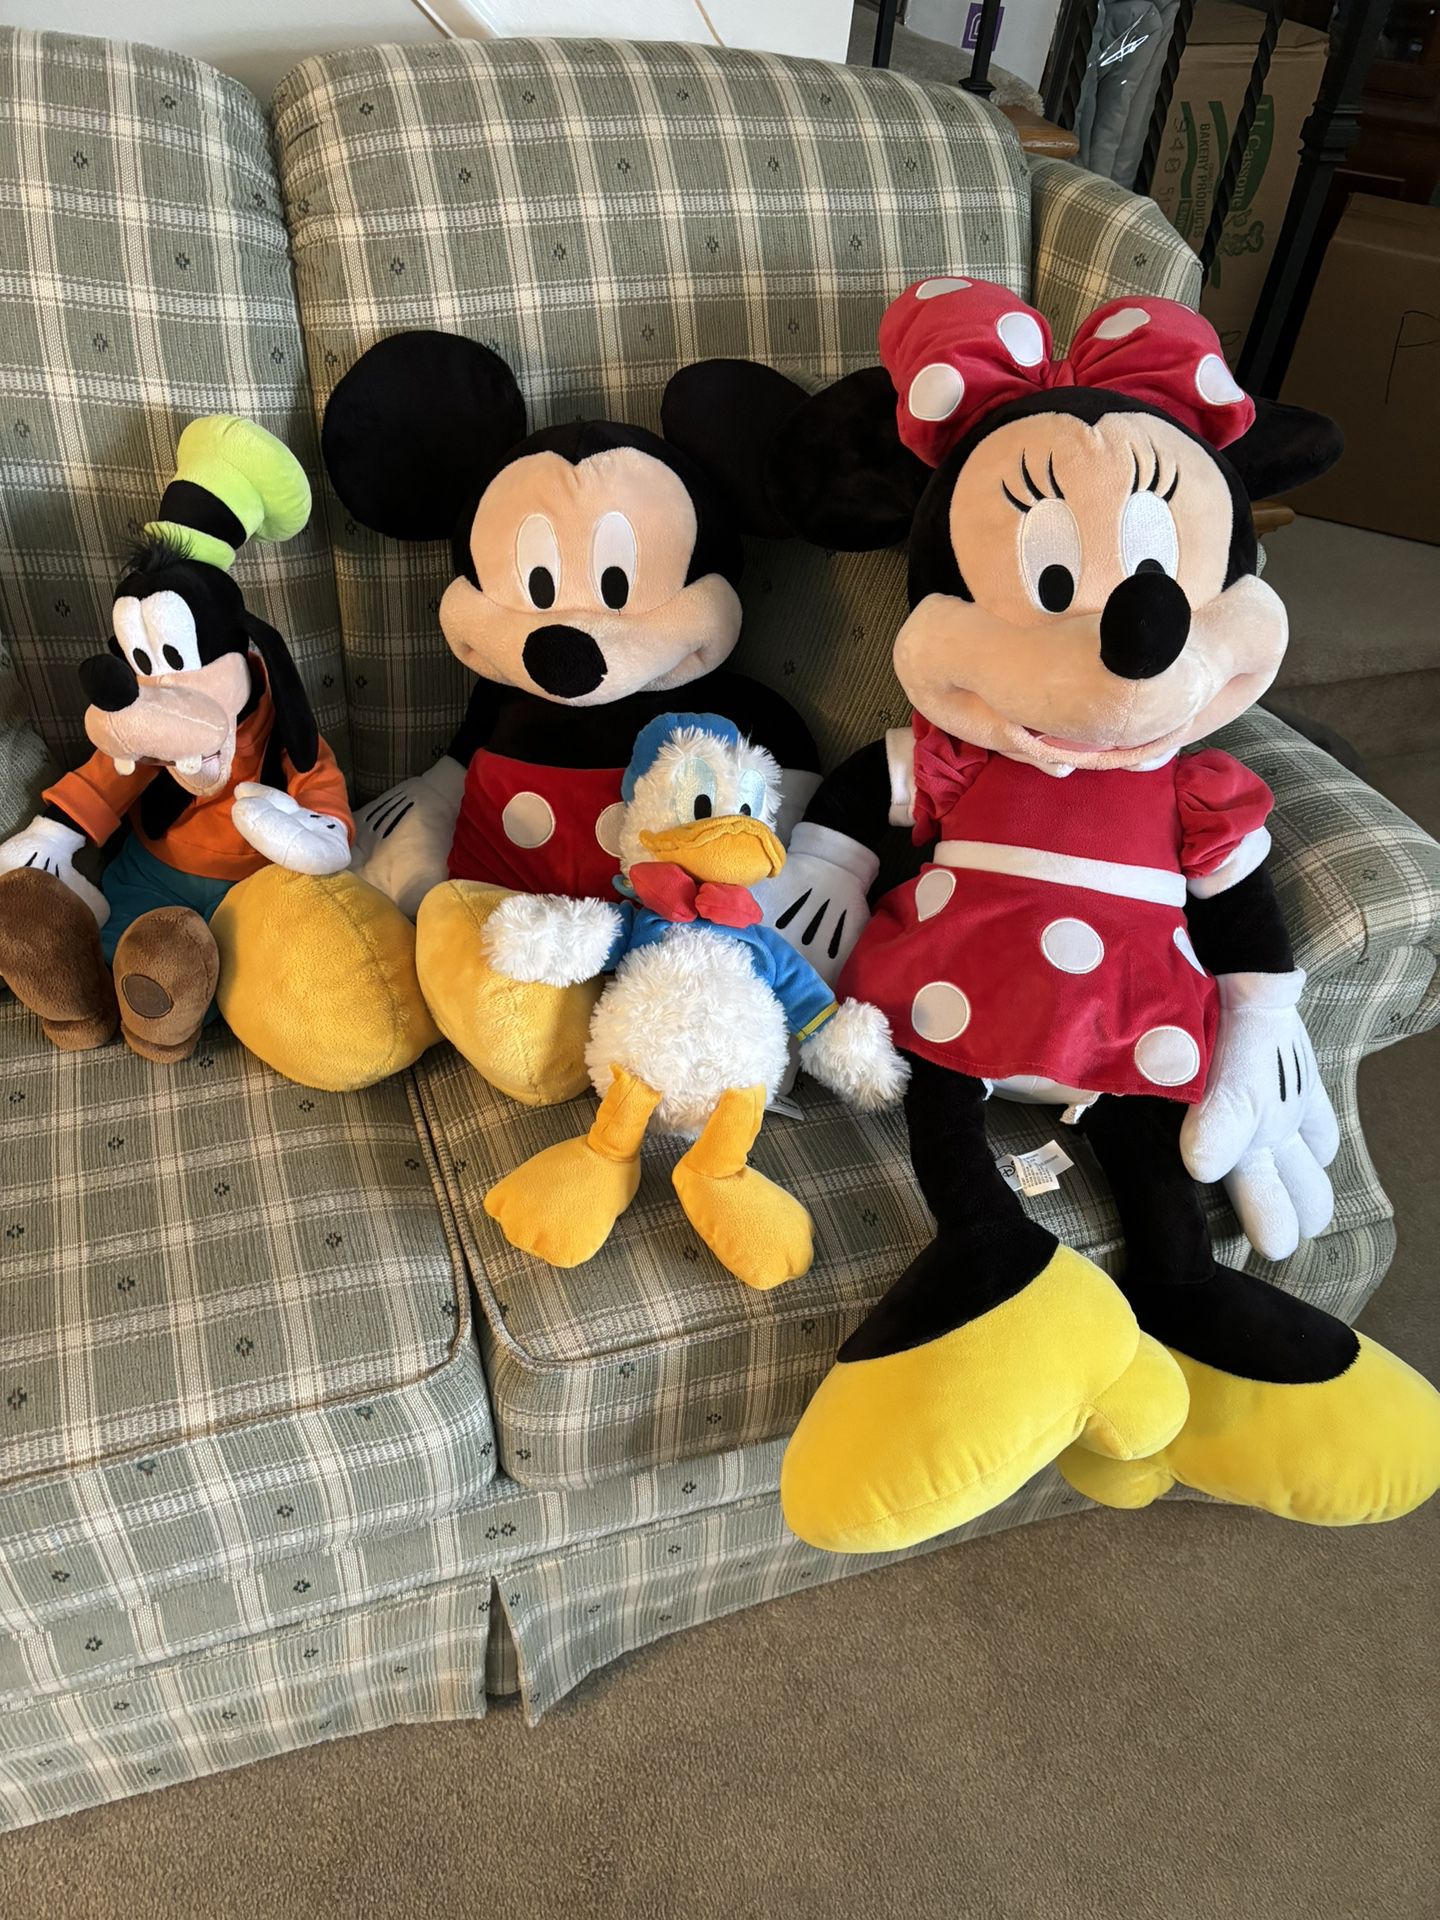 Disney parks Authentic Stuffed Animals 